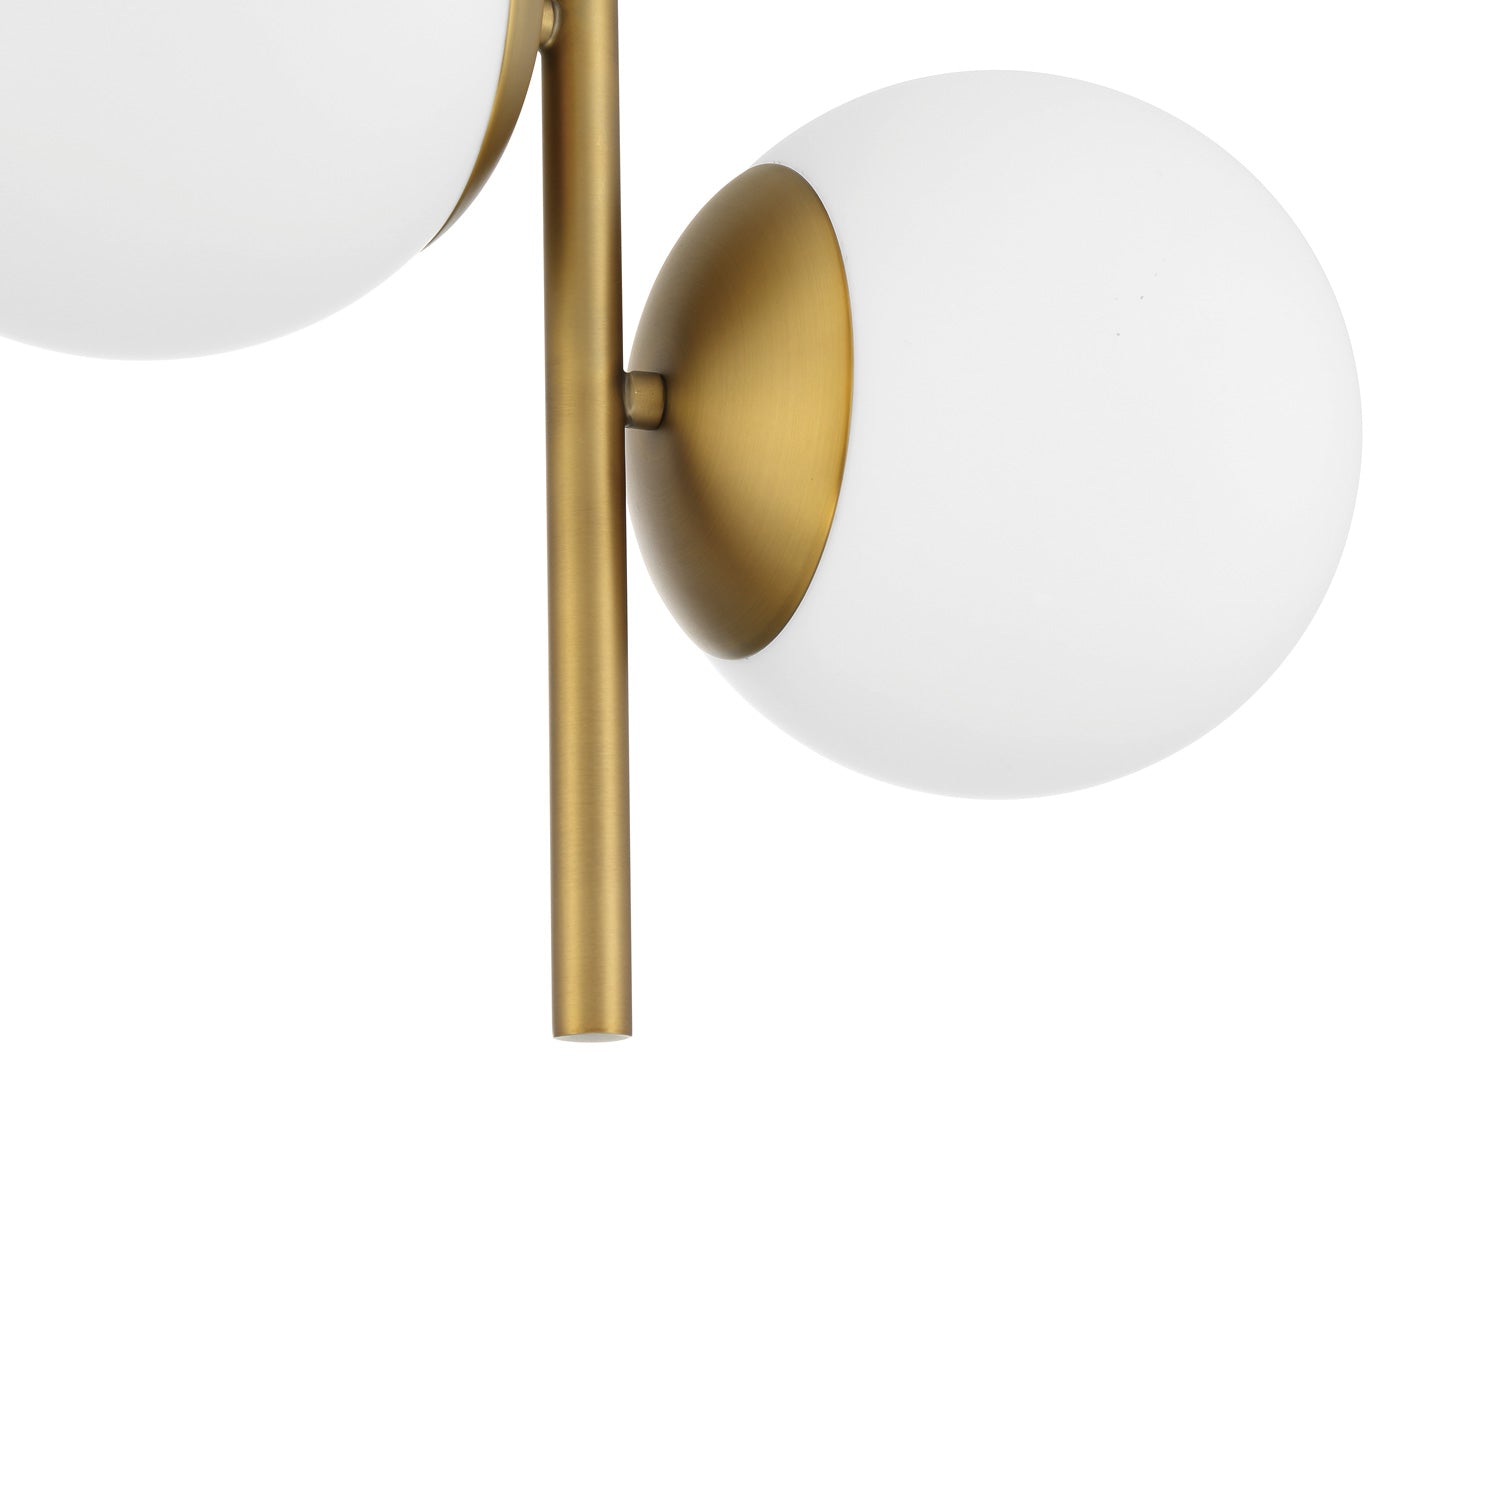 Castell 2 Globe LED Pendant, Matte Black and Aged Brass